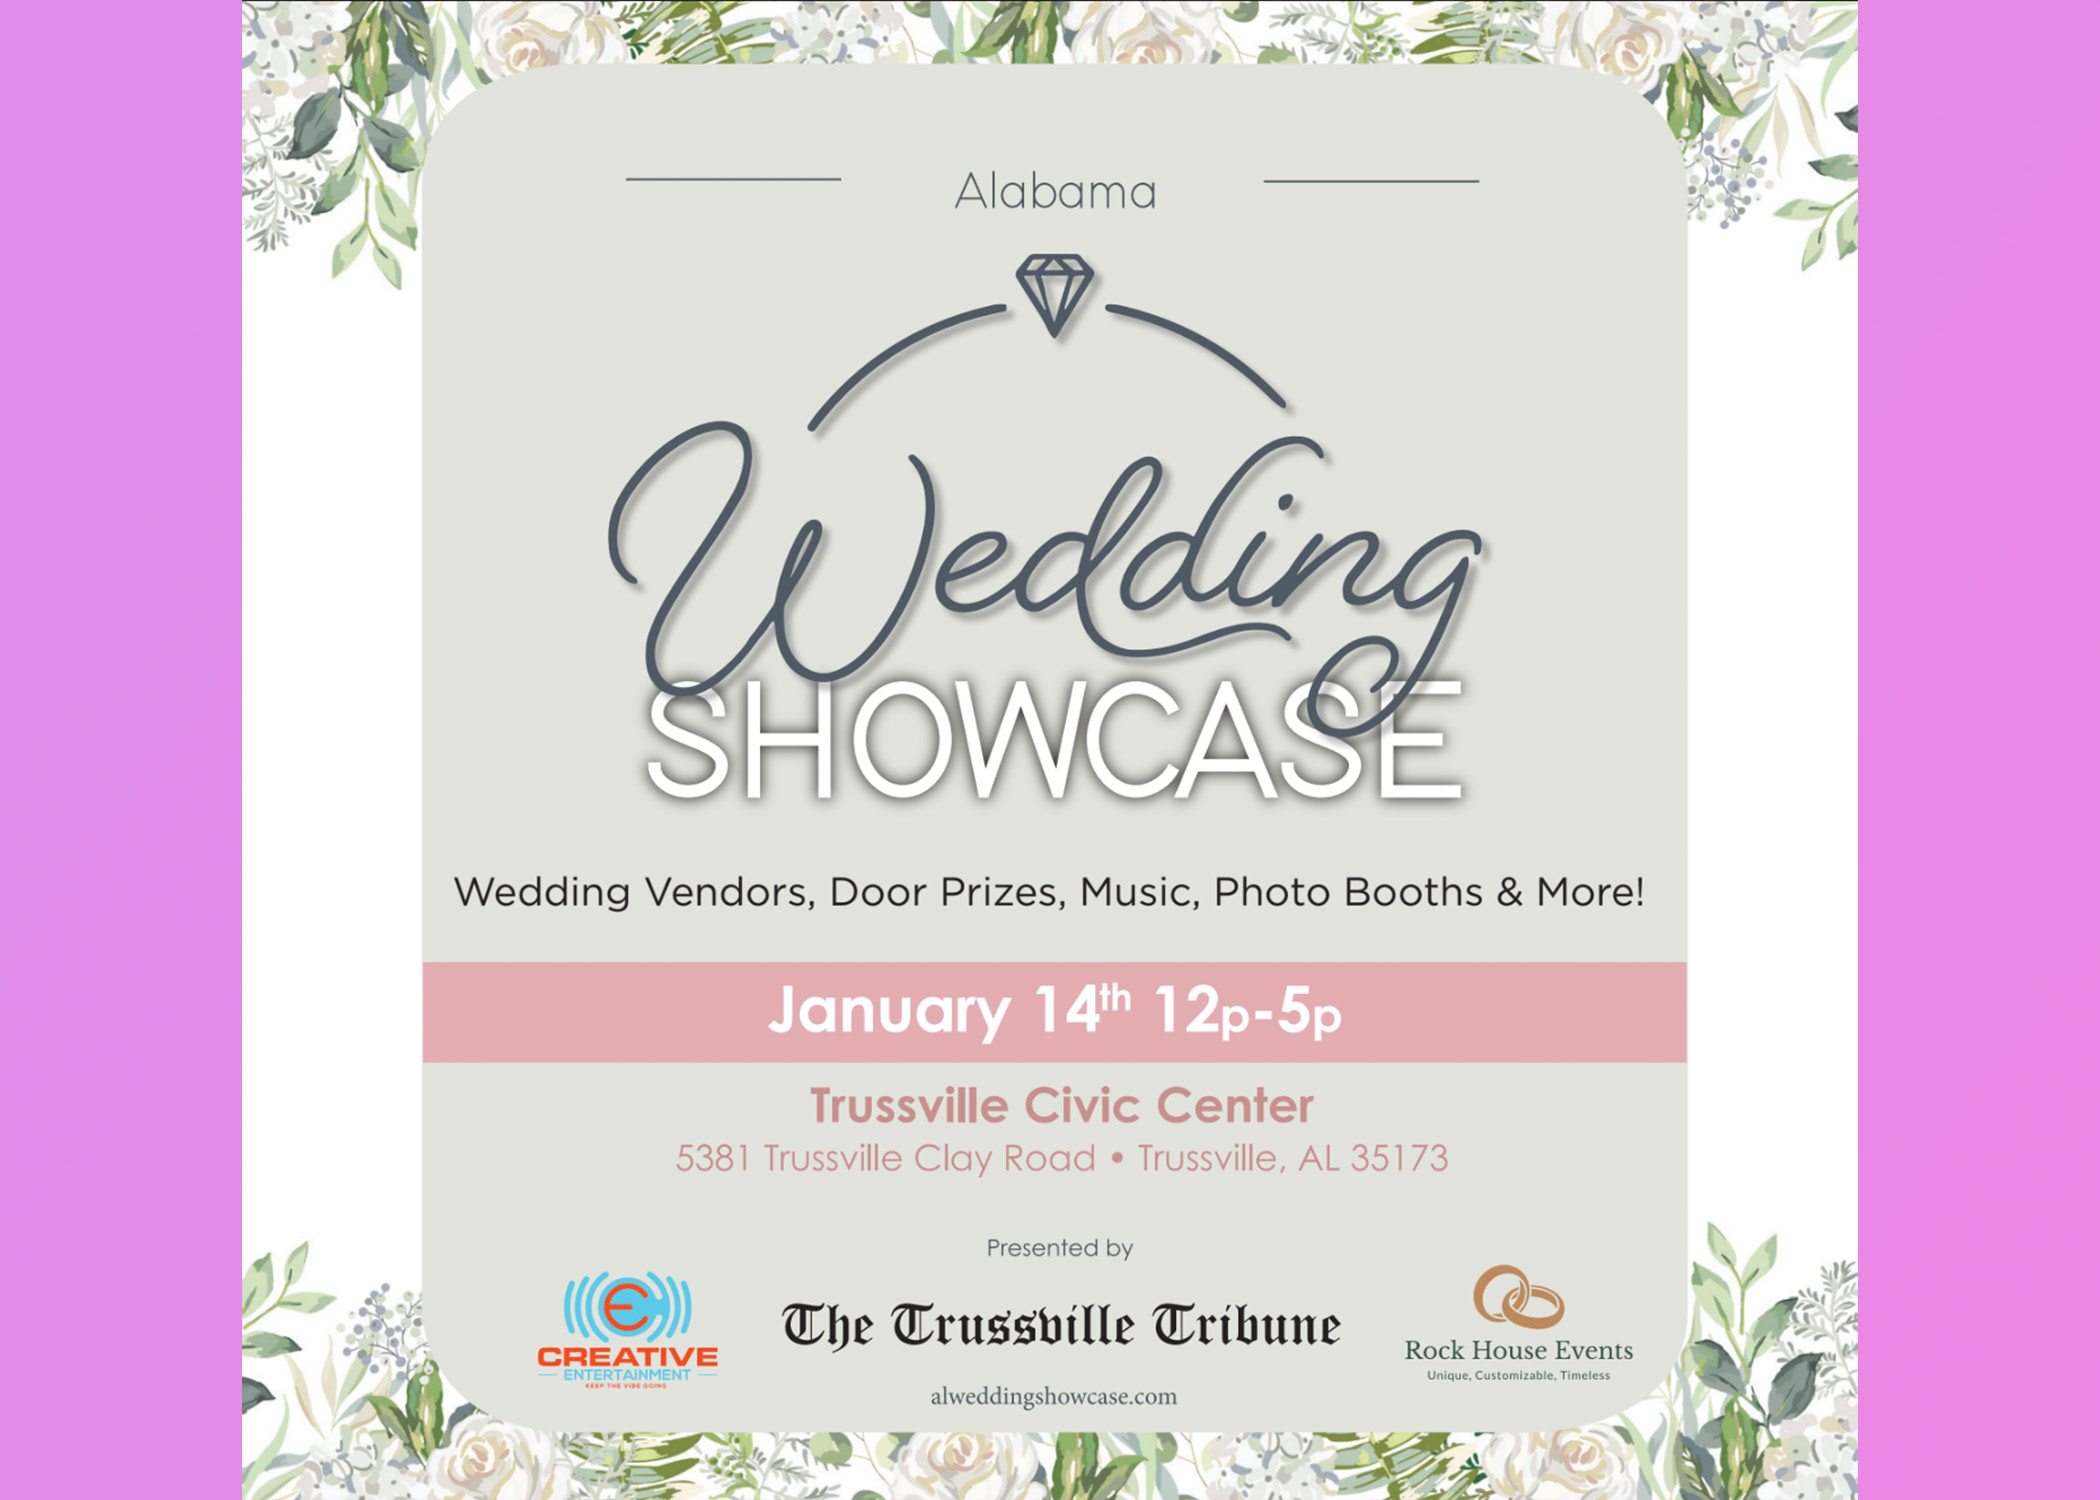 Alabama Wedding Showcase this Sunday at Trussville Civic Center